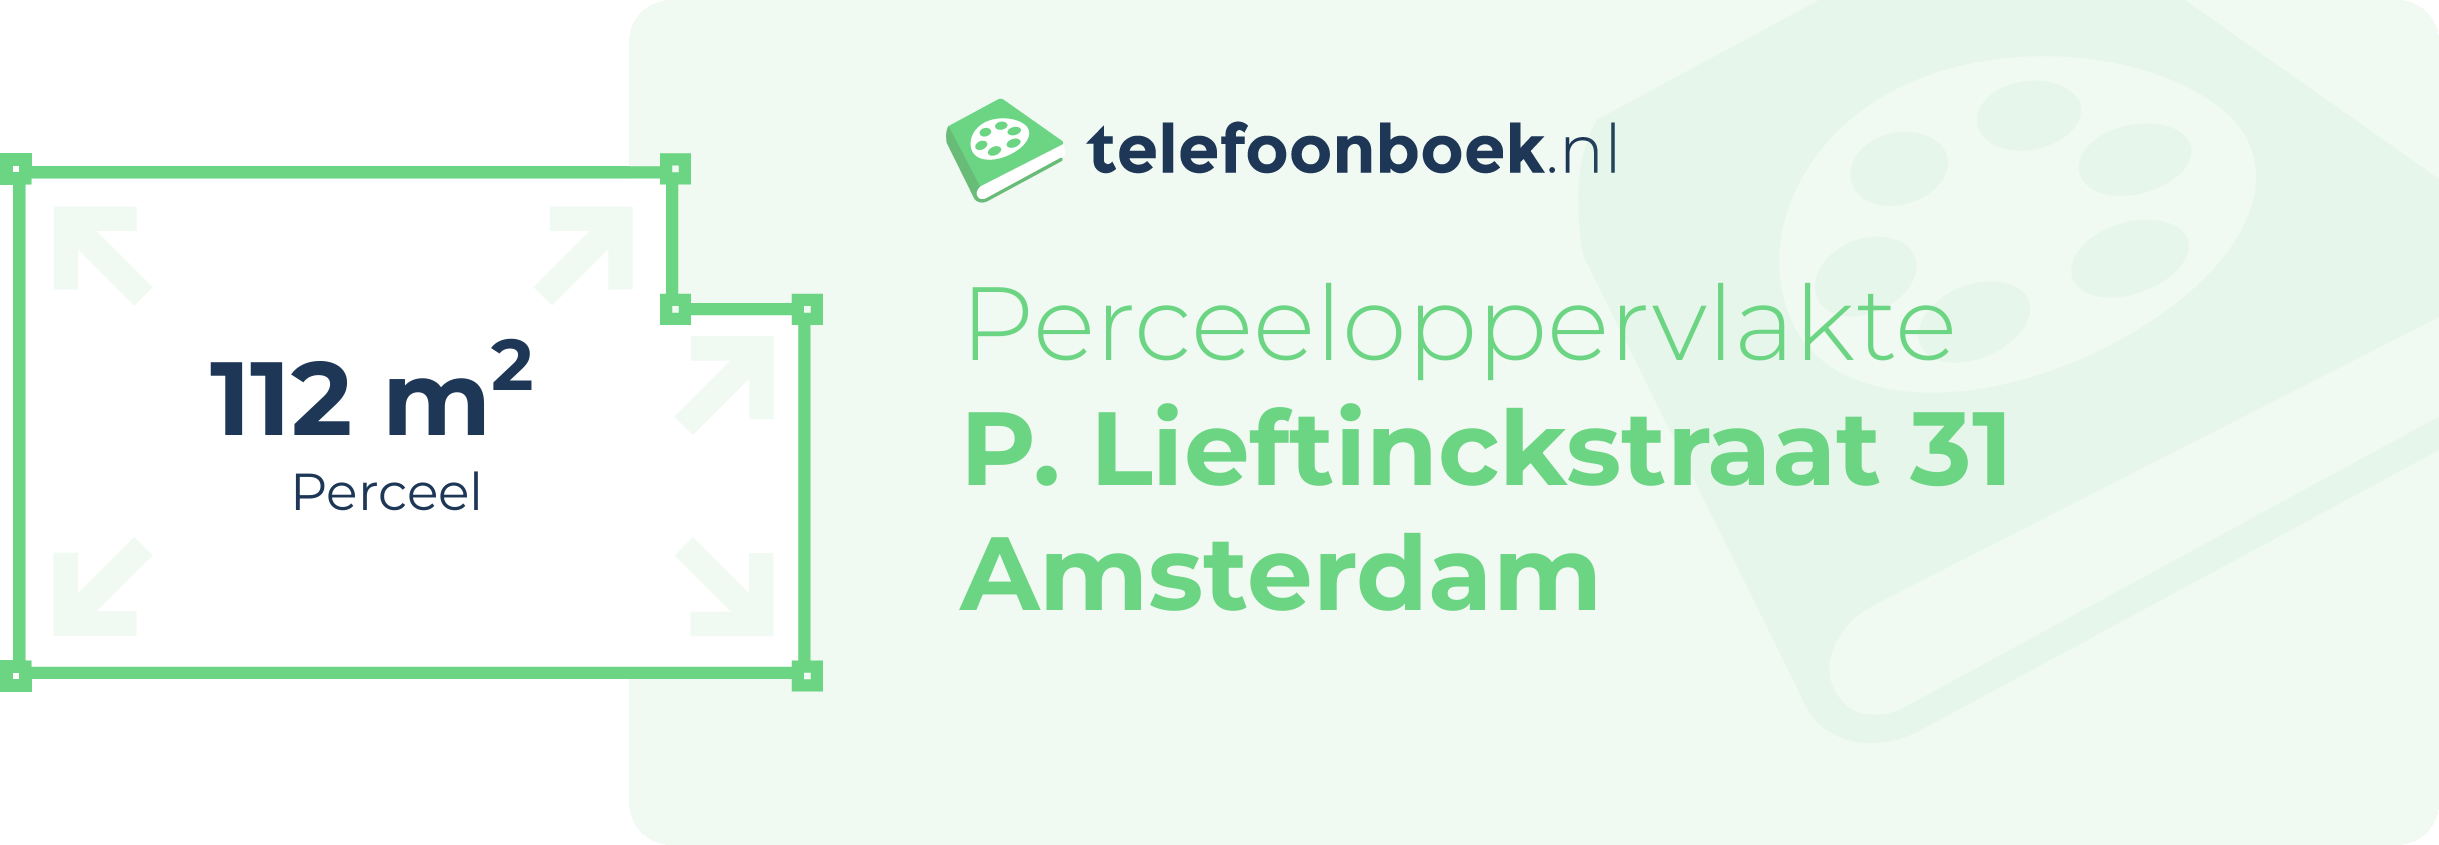 Perceeloppervlakte P. Lieftinckstraat 31 Amsterdam